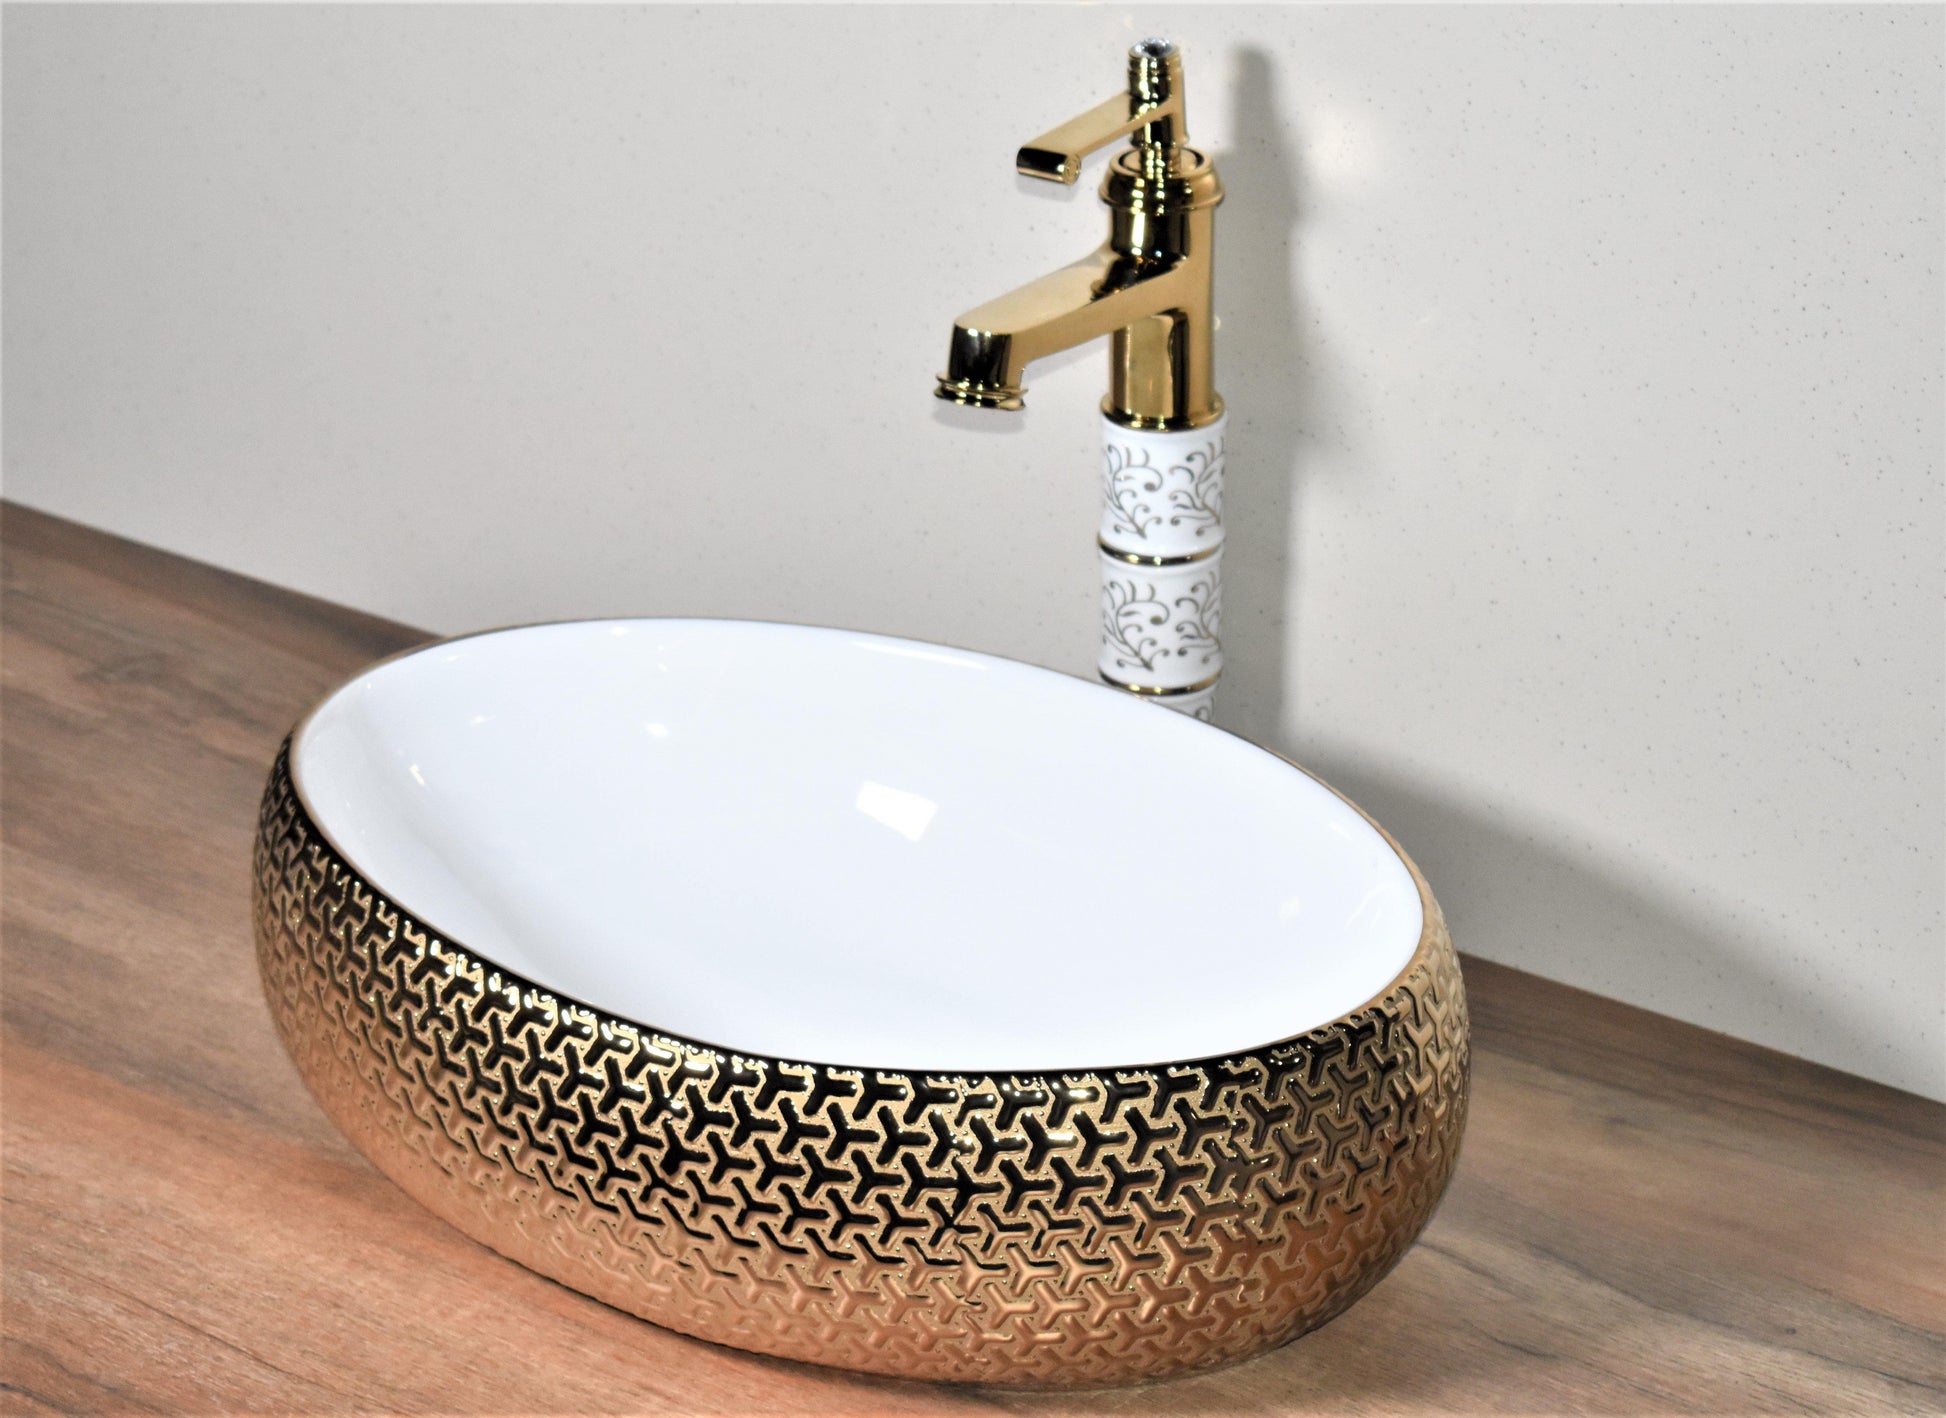 Ceramic Premium Designer Oval Shape Table Top Over Counter Vessel Sink Wash Basin for Bathroom 18 X 13 X 5.5 Inch Gold White Basin For Bathroom - Bath Outlet